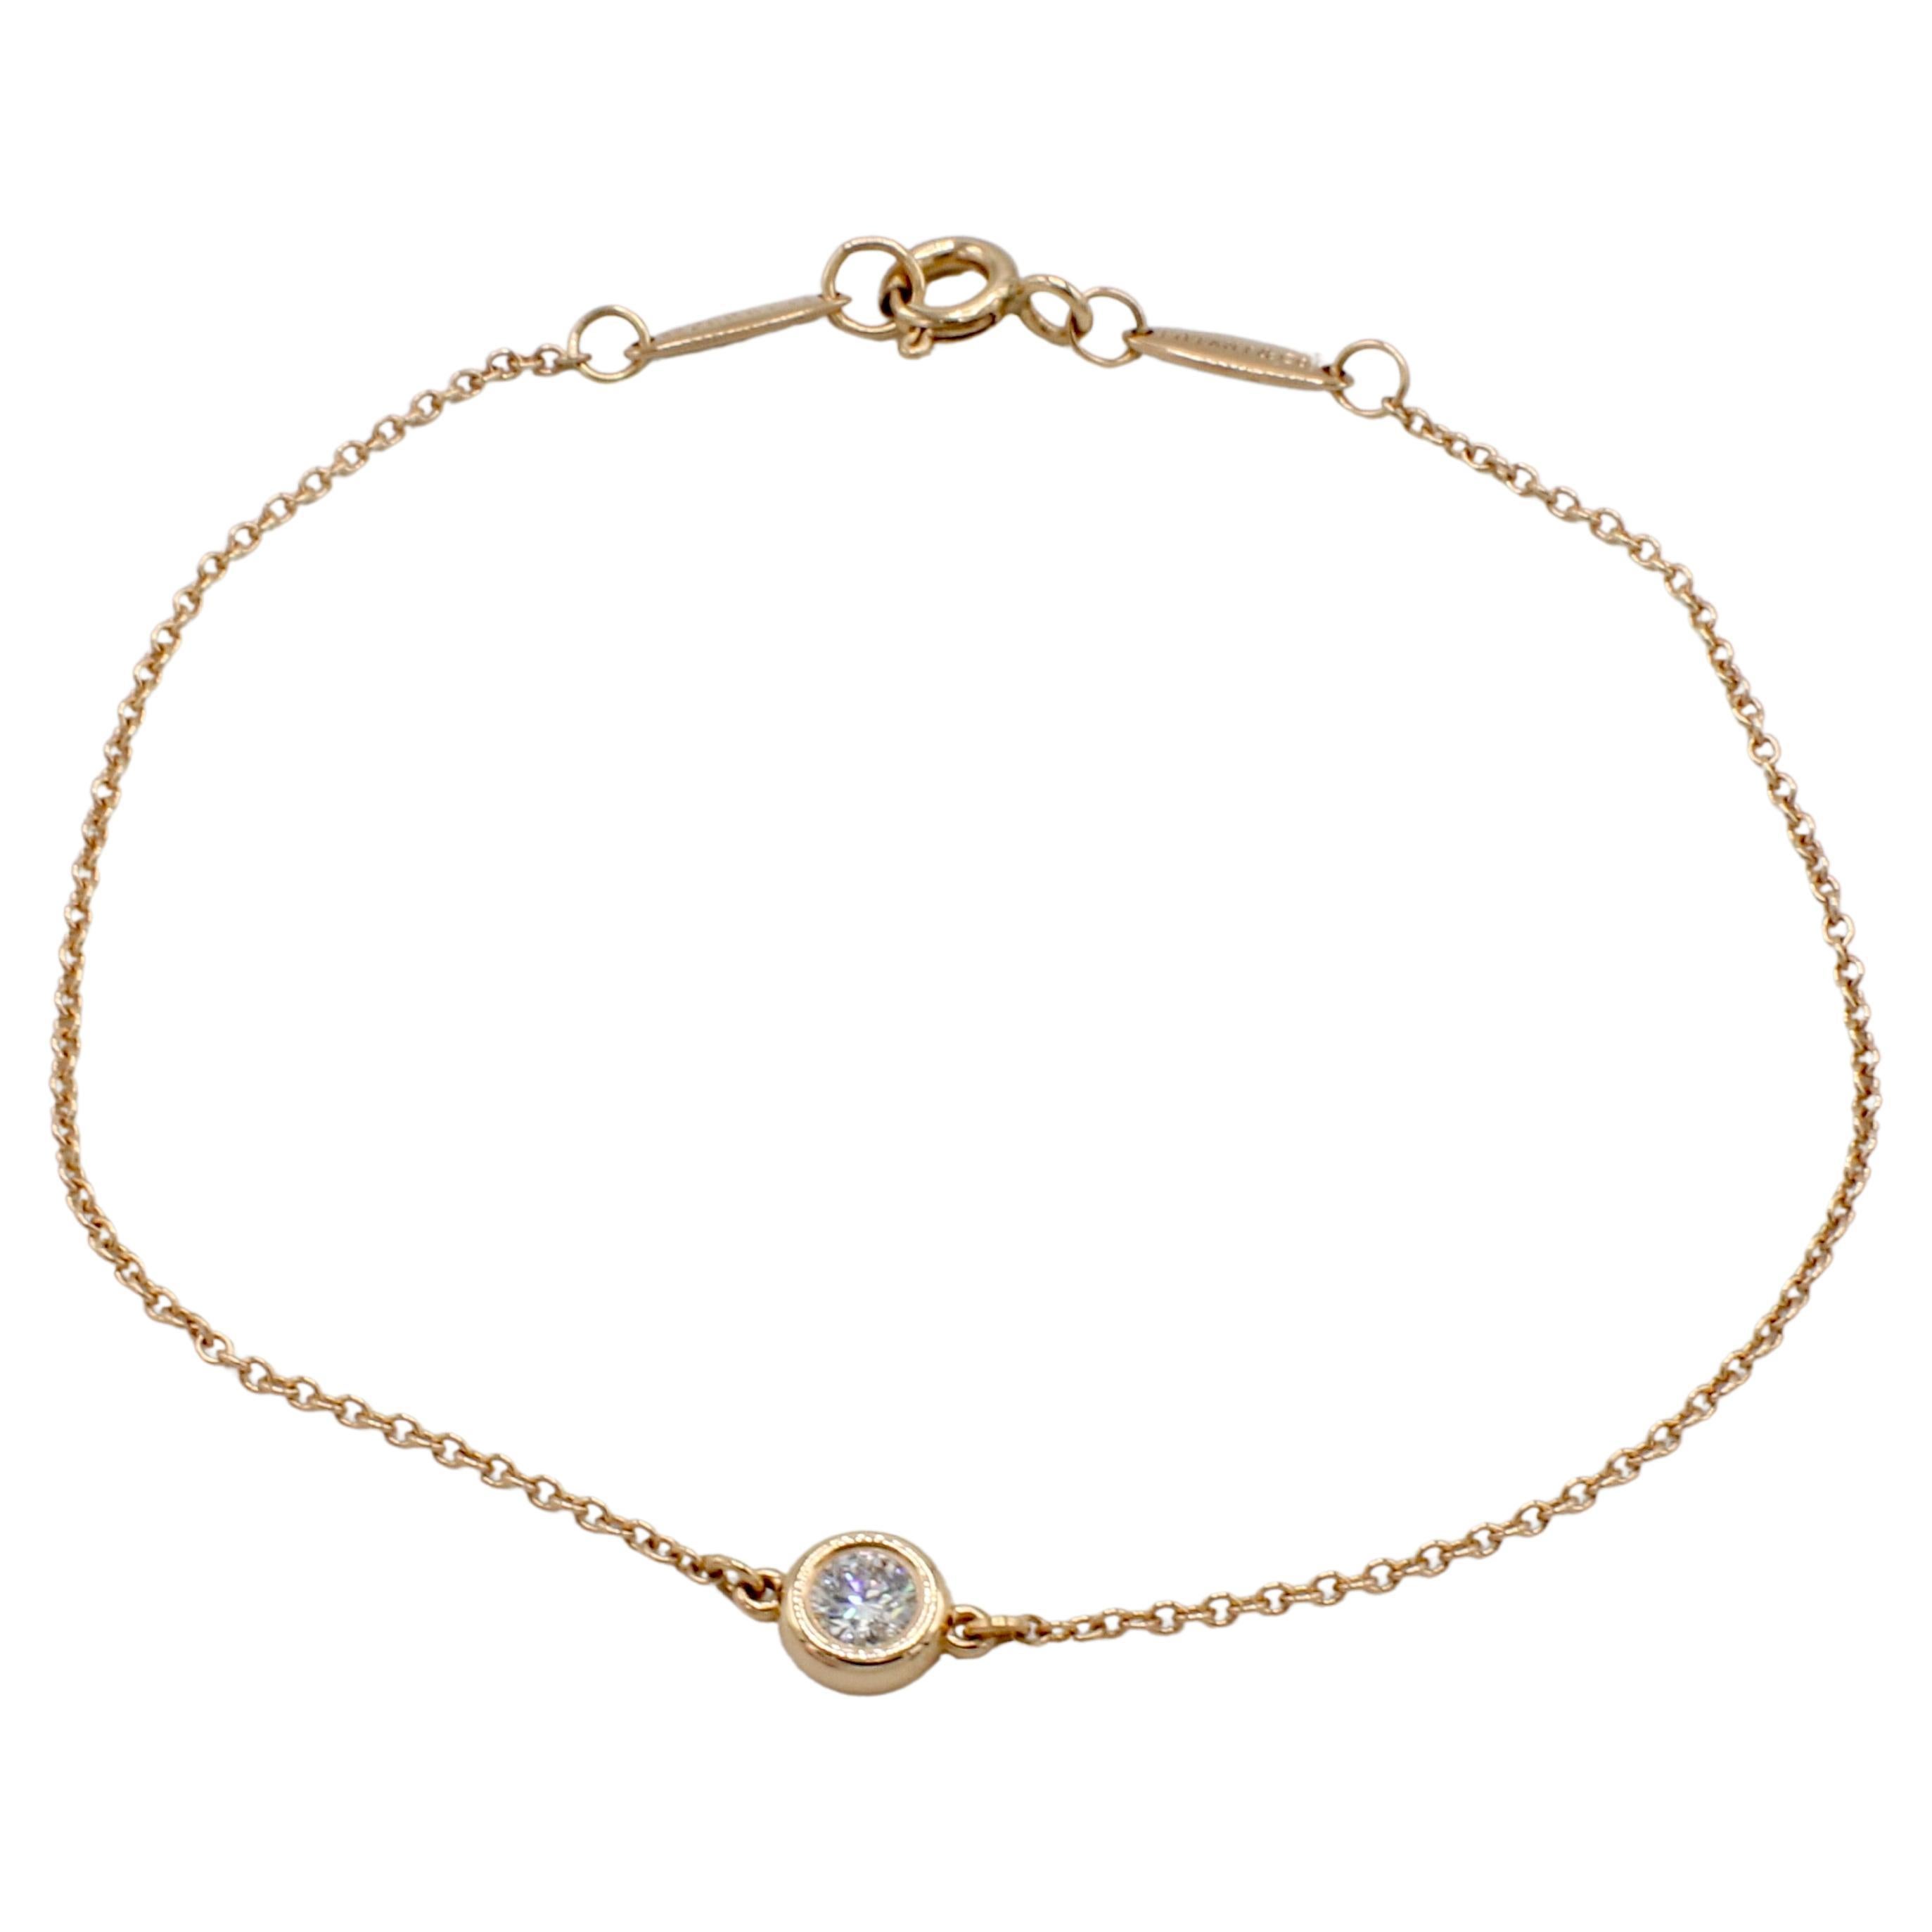 Tiffany & Co. Elsa Peretti Rose Gold Natural Diamond By The Yard Bracelet 